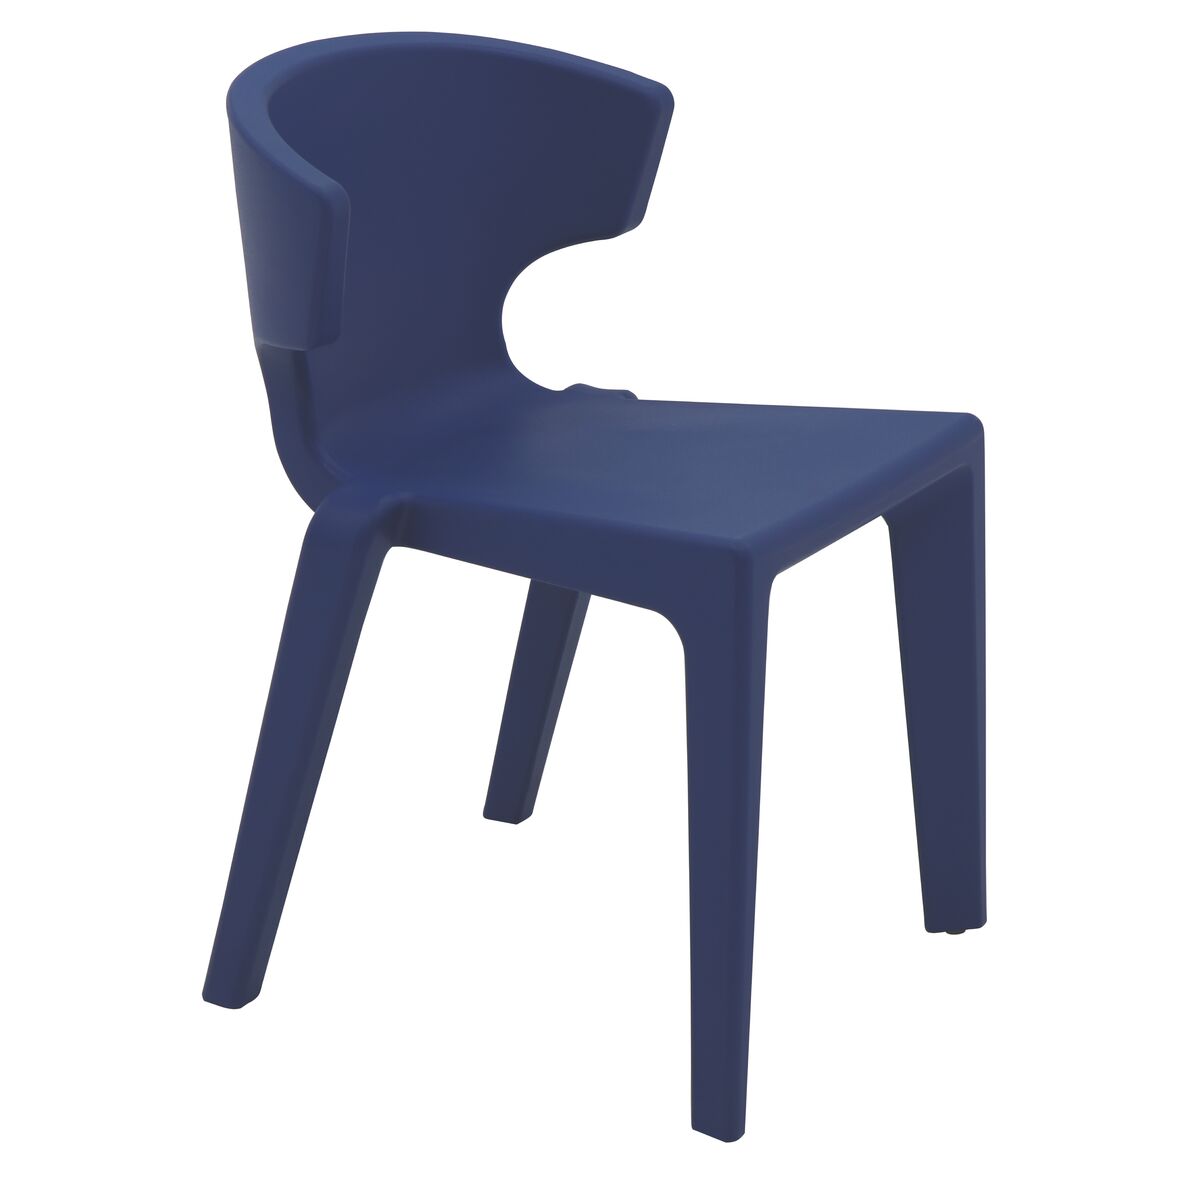 Tramontina Marilyn Chair in Mariner Polyethylene